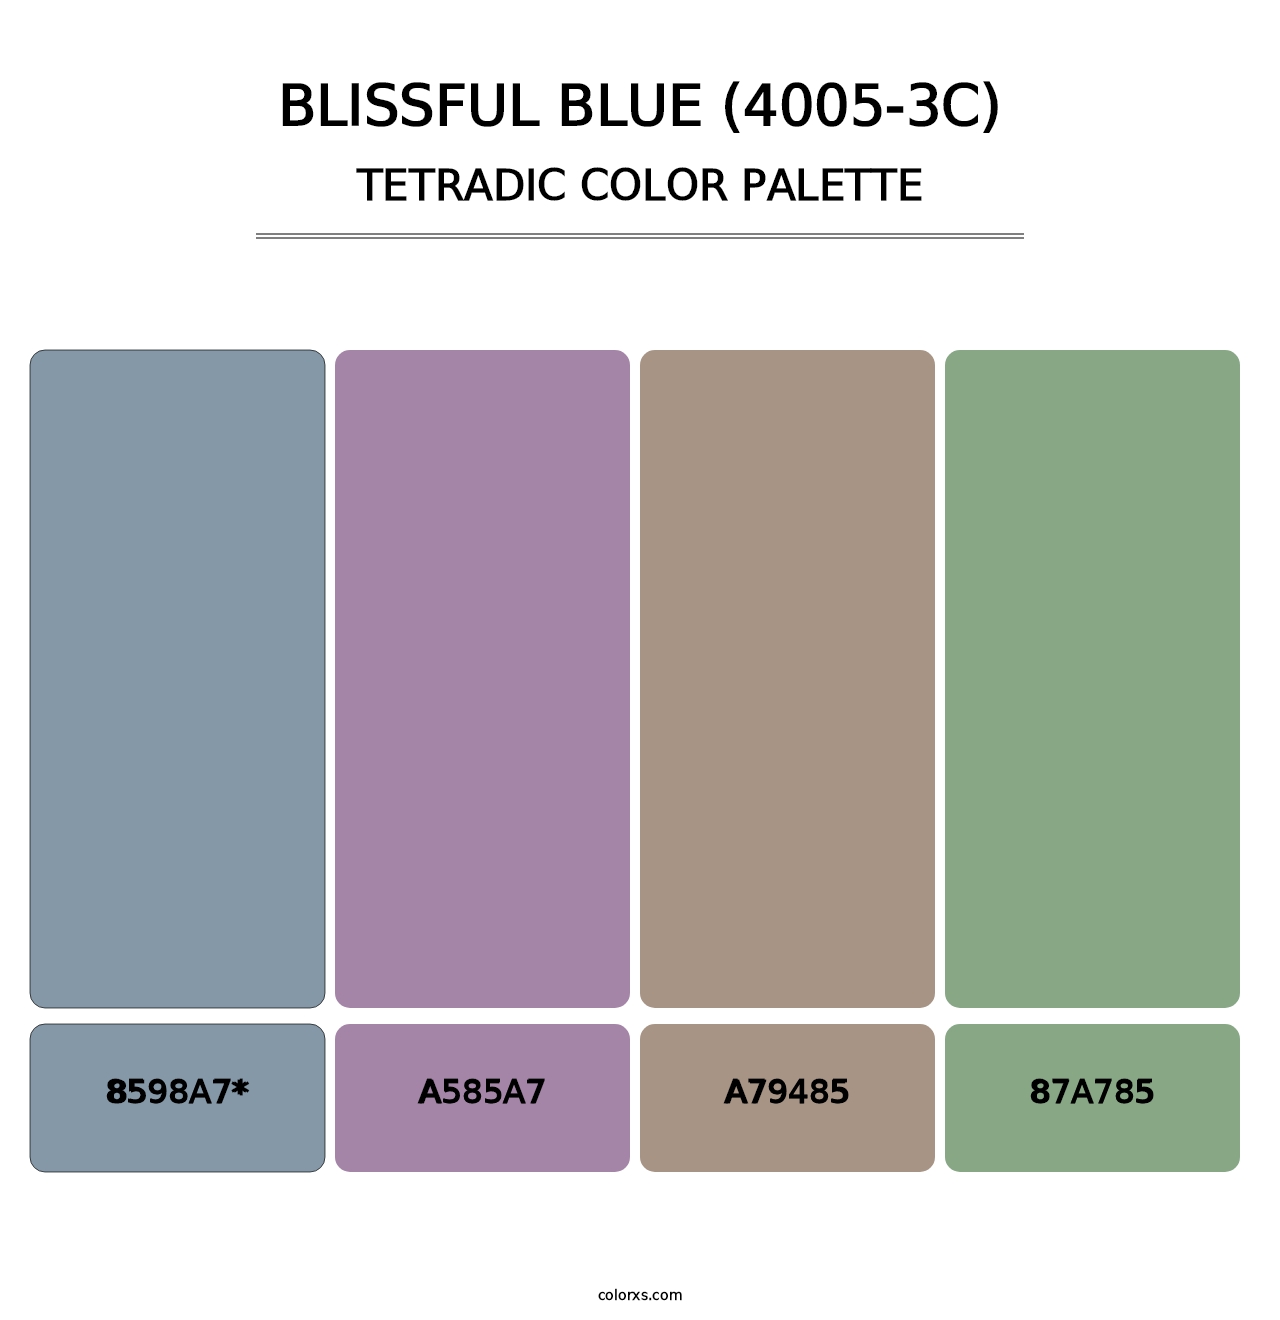 Blissful Blue (4005-3C) - Tetradic Color Palette